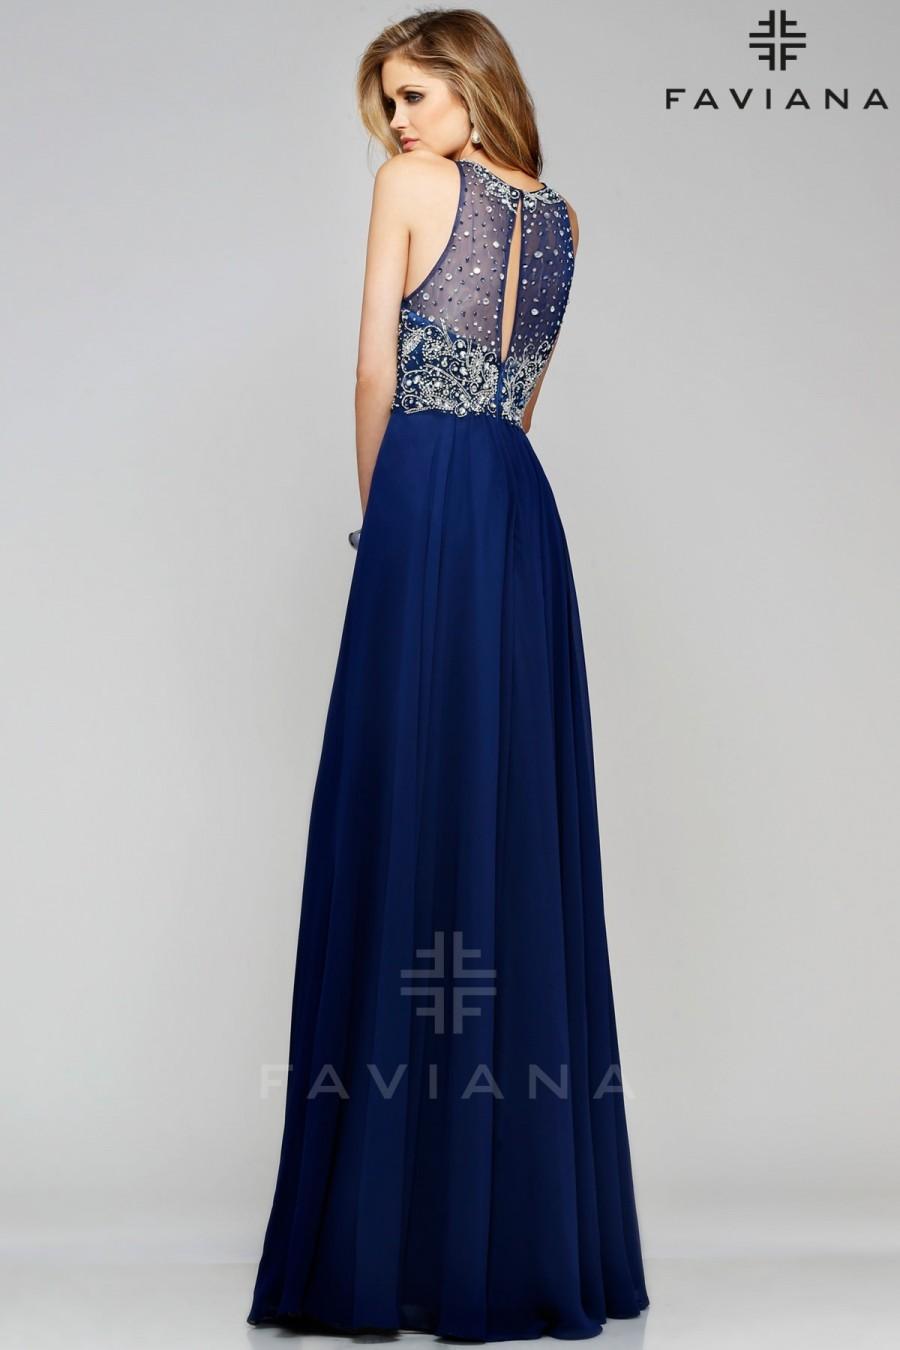 زفاف - Faviana S7560 Beaded Chiffon Evening Gown - 2016 Spring Trends Dresses